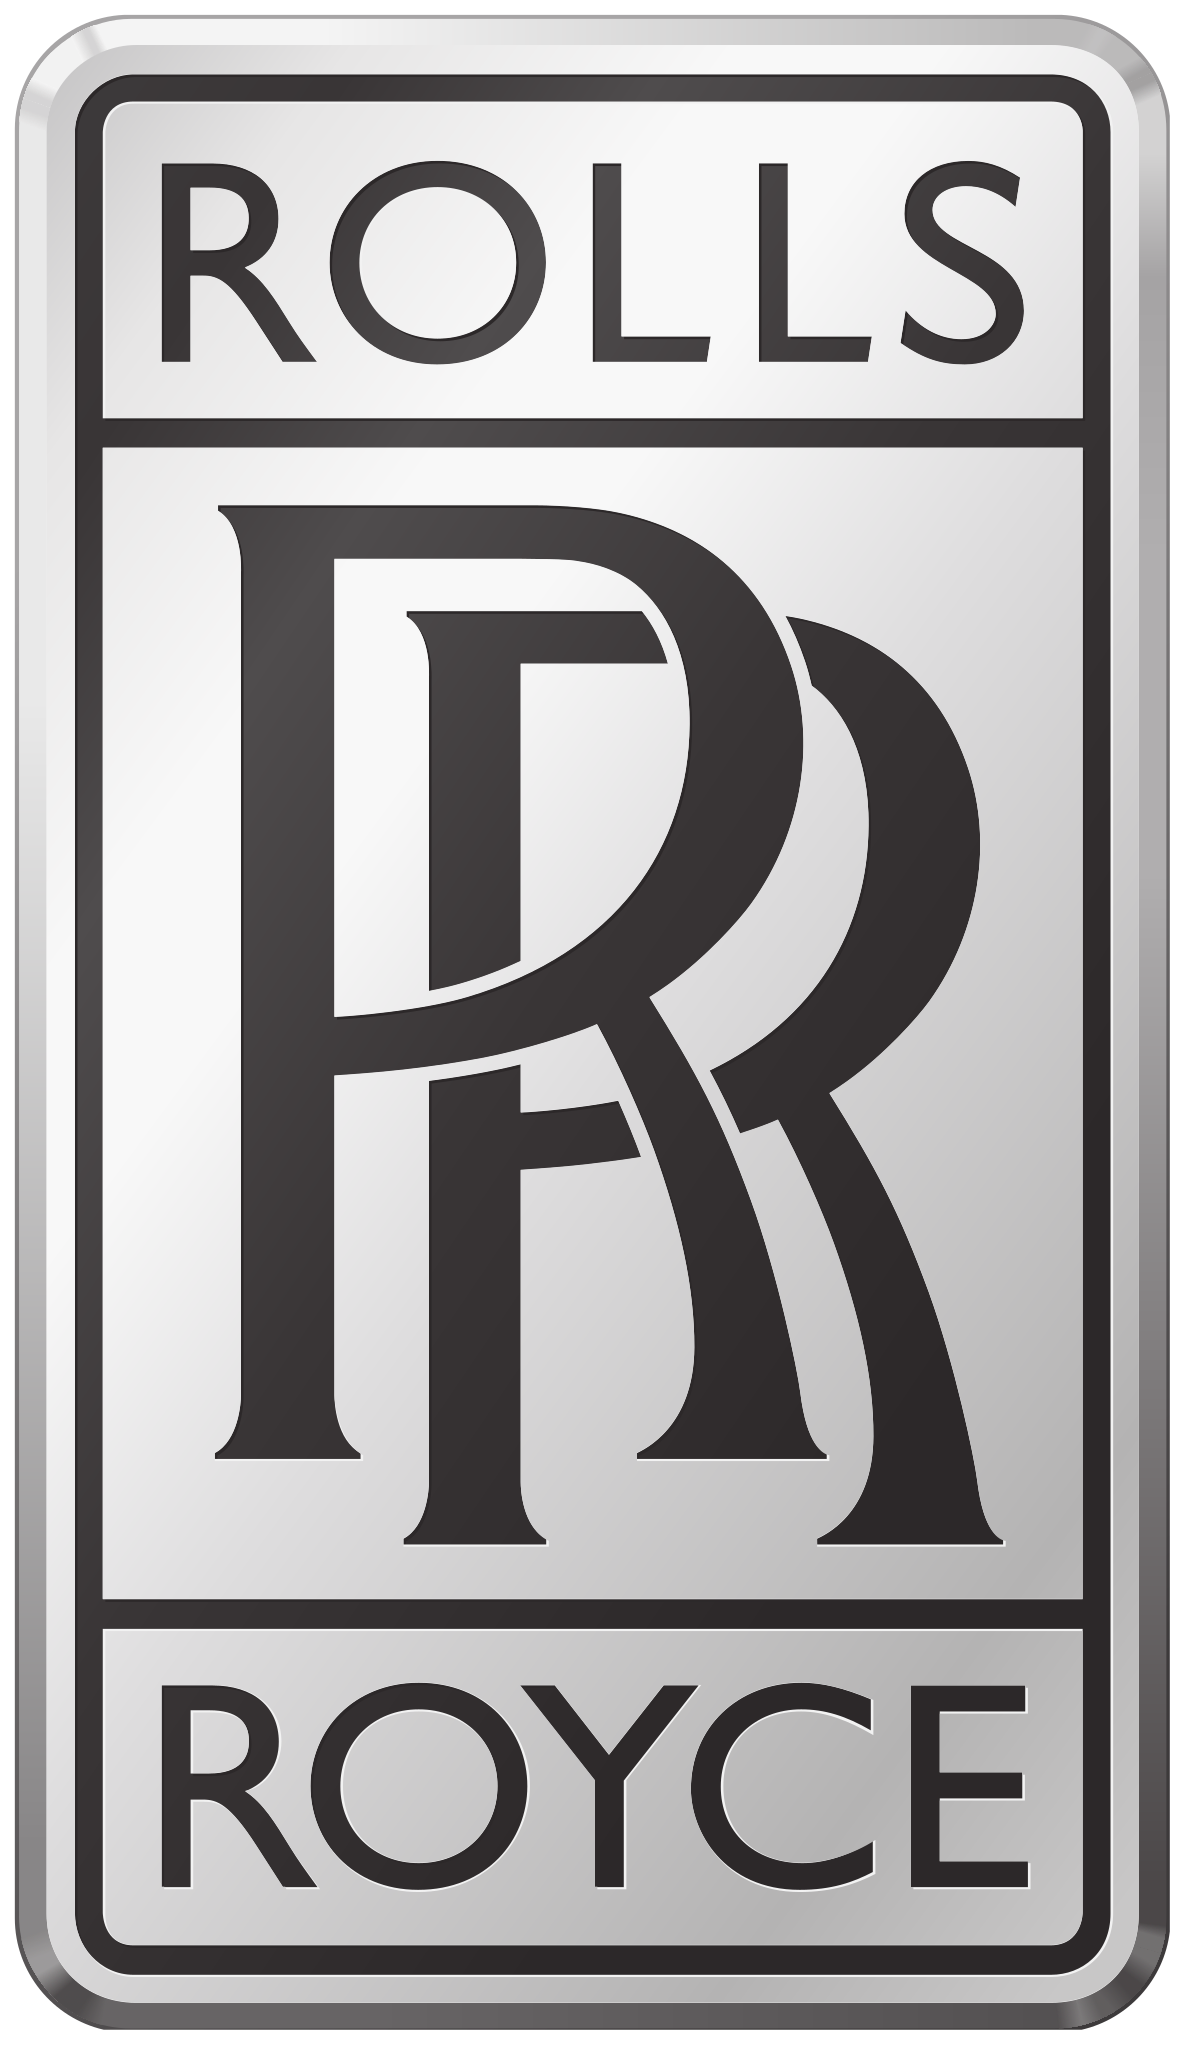 RR_logo